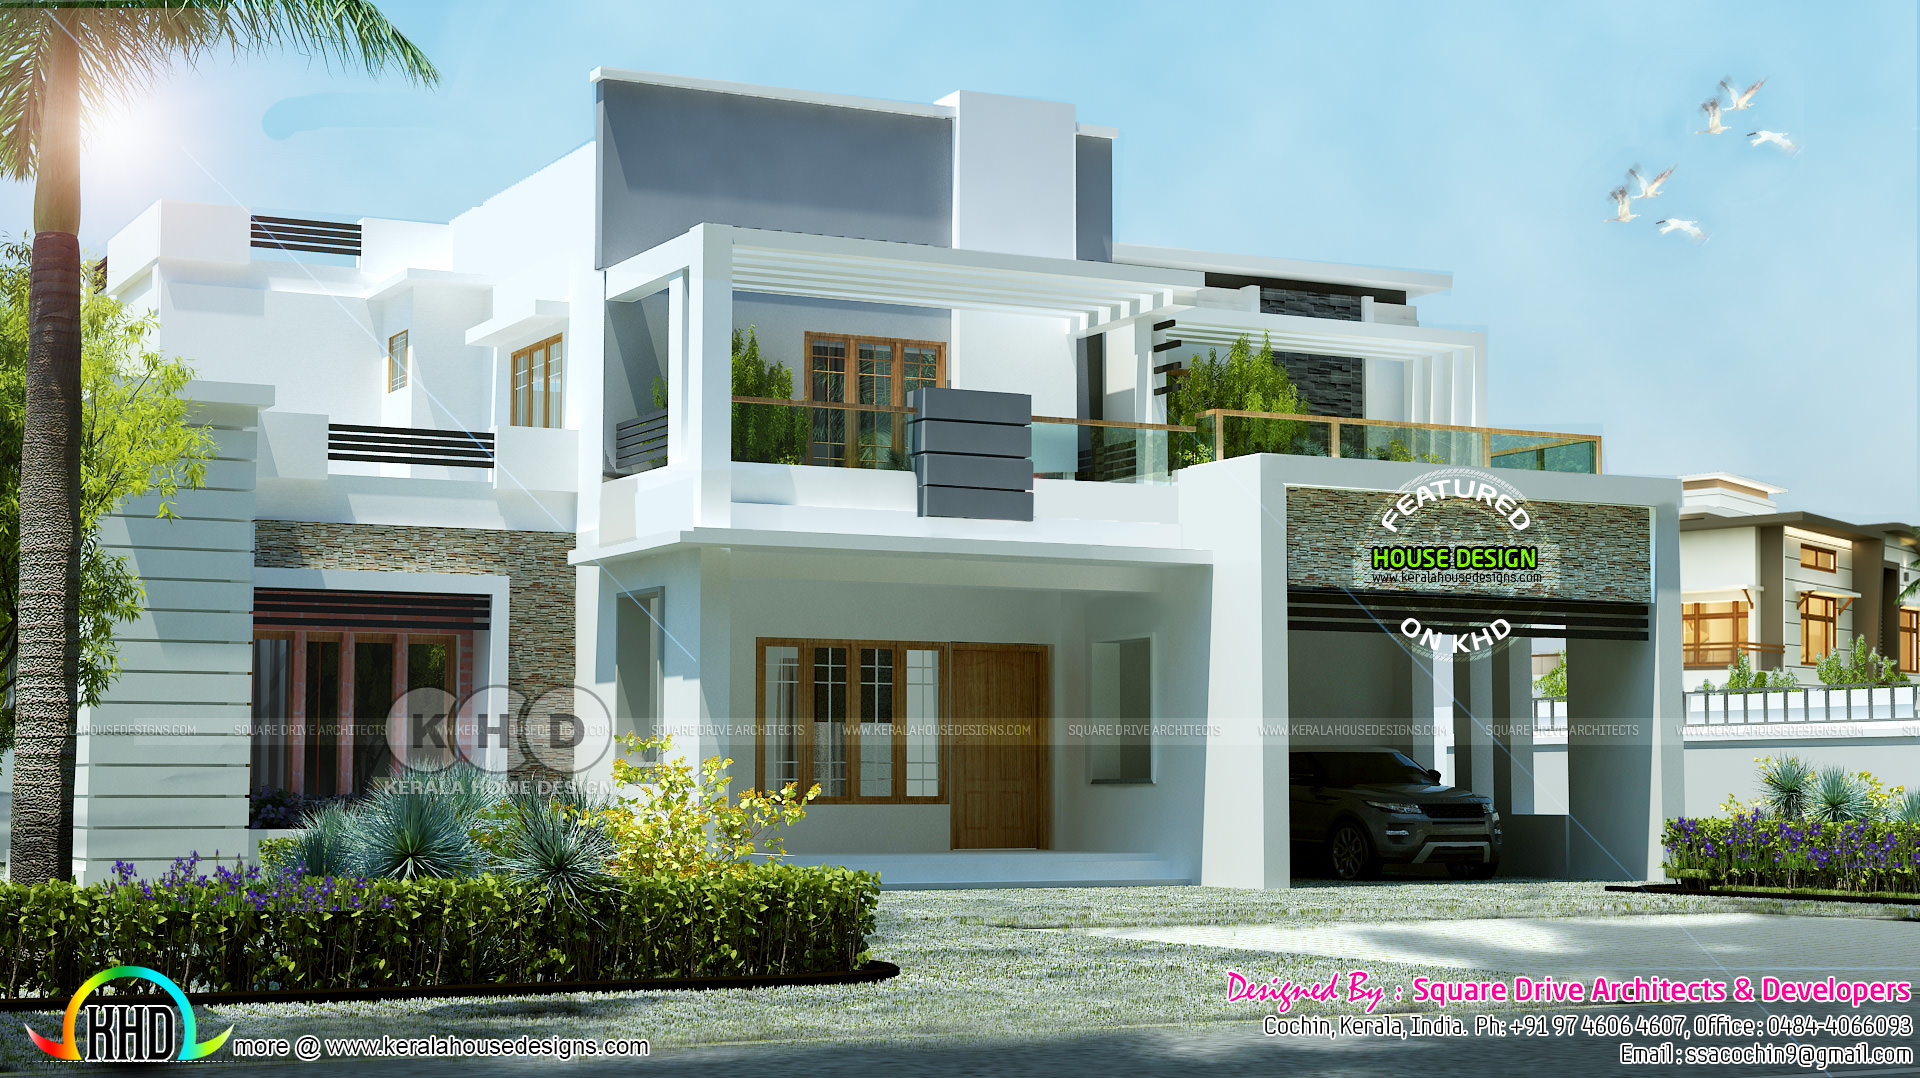 kerala modern home designs